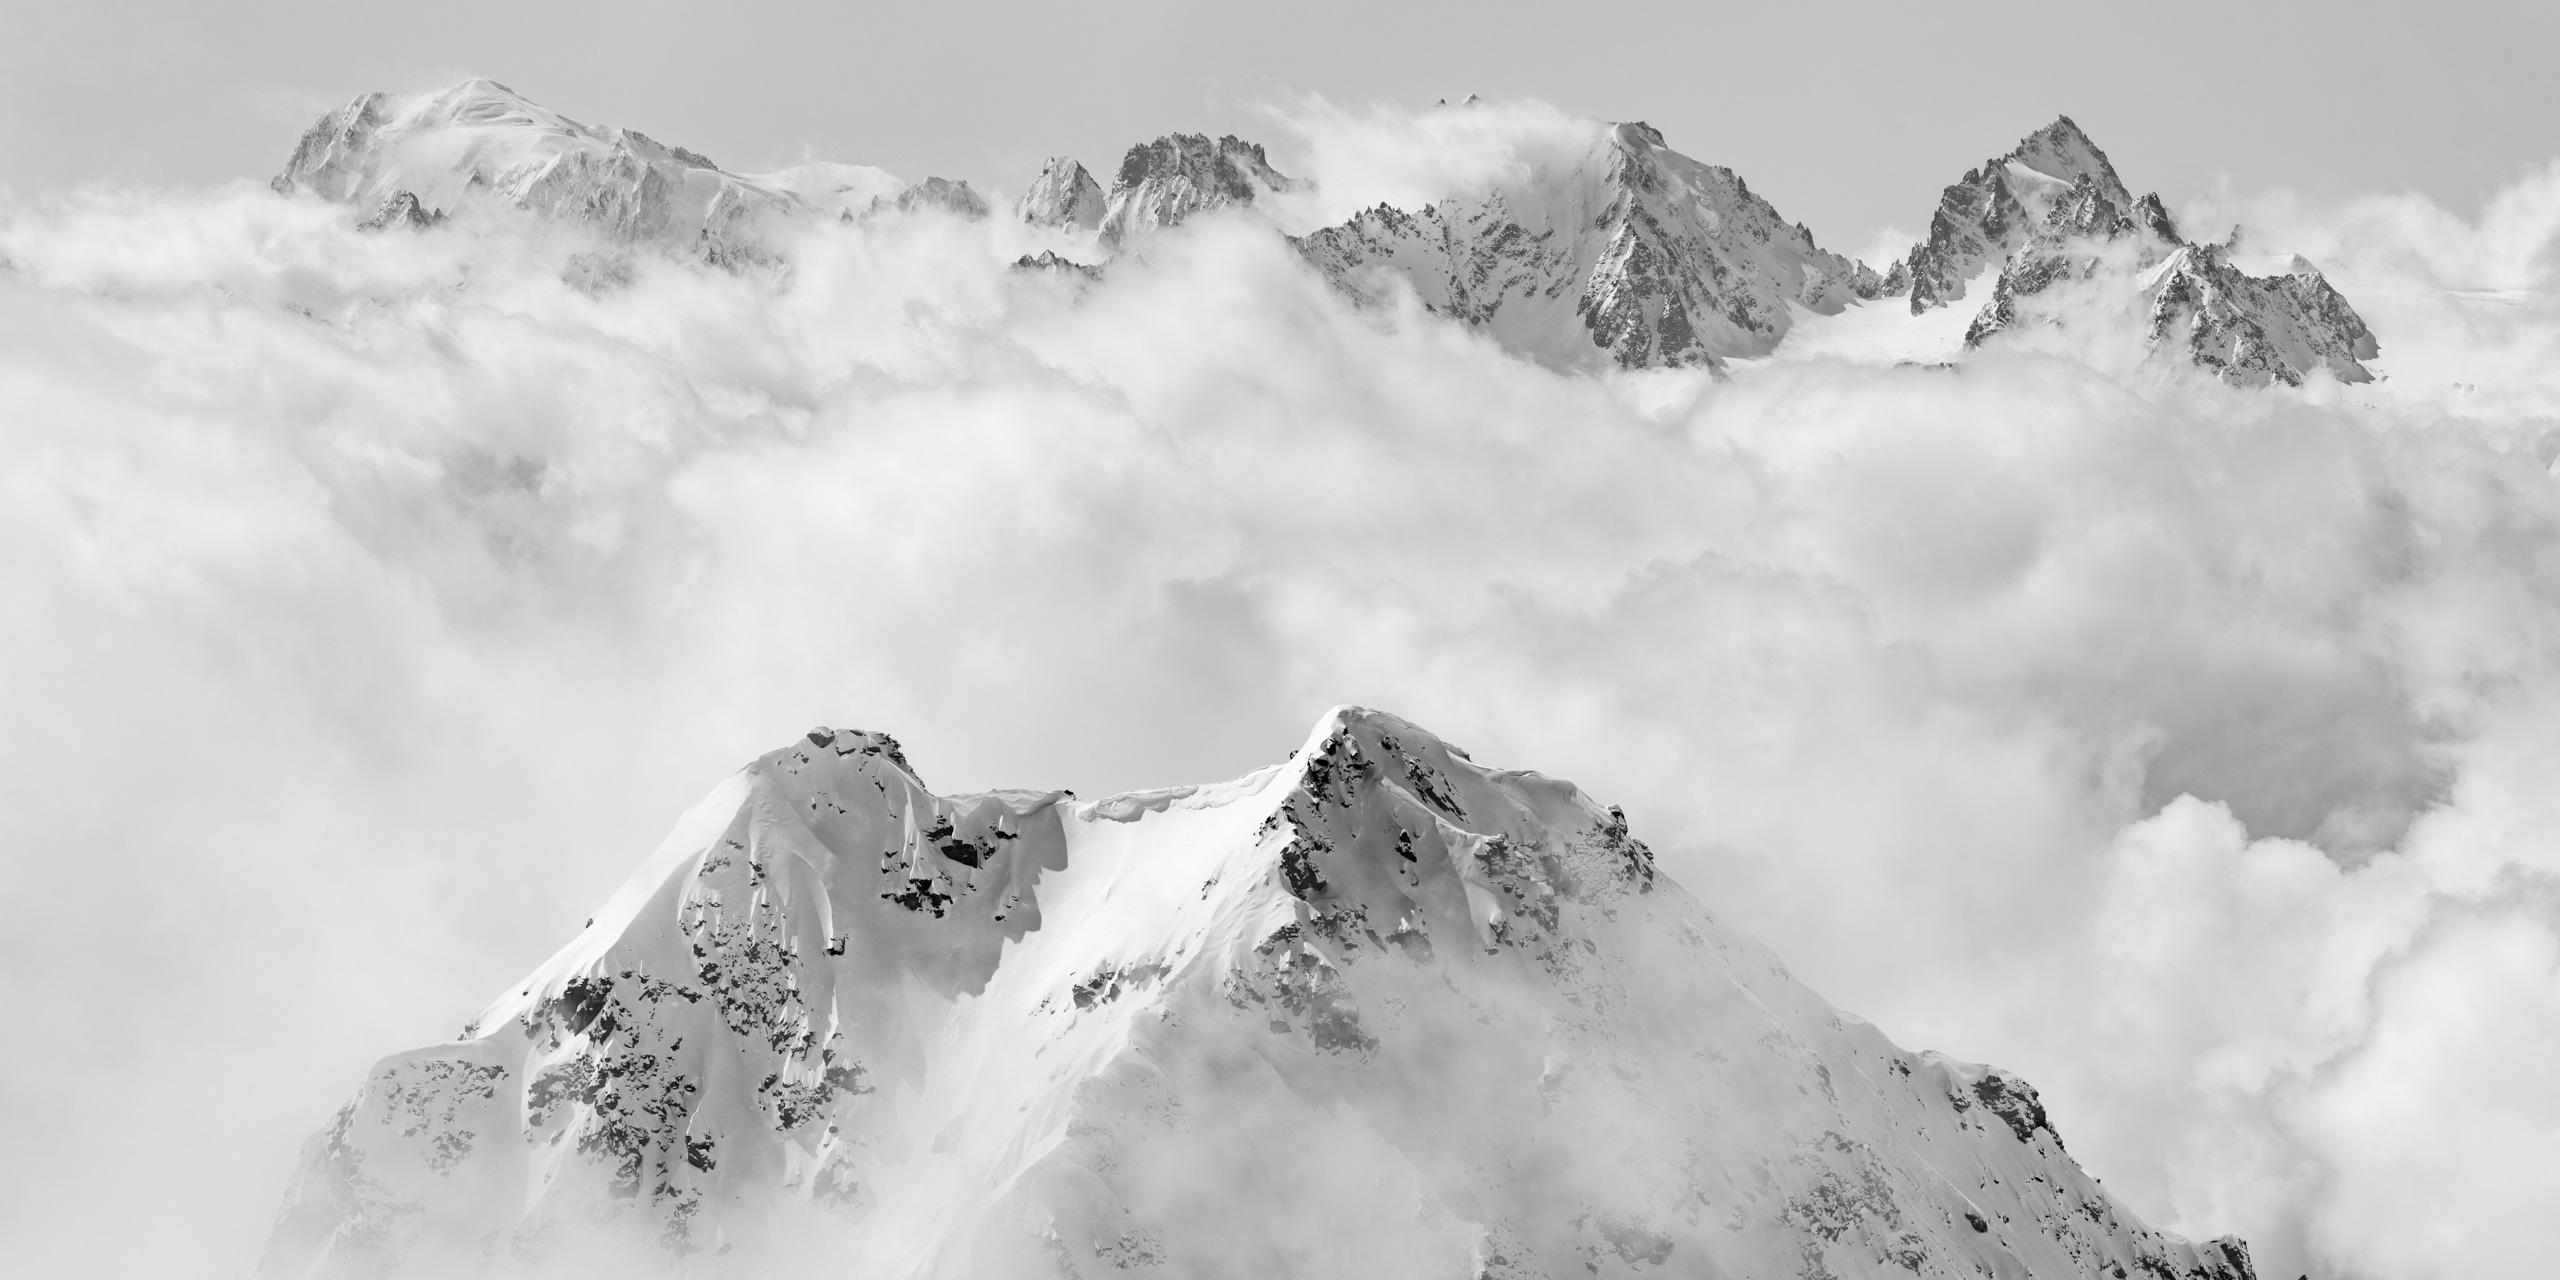 Val de Bagnes -pictures of mont blanc in france - Mont Blanc massif